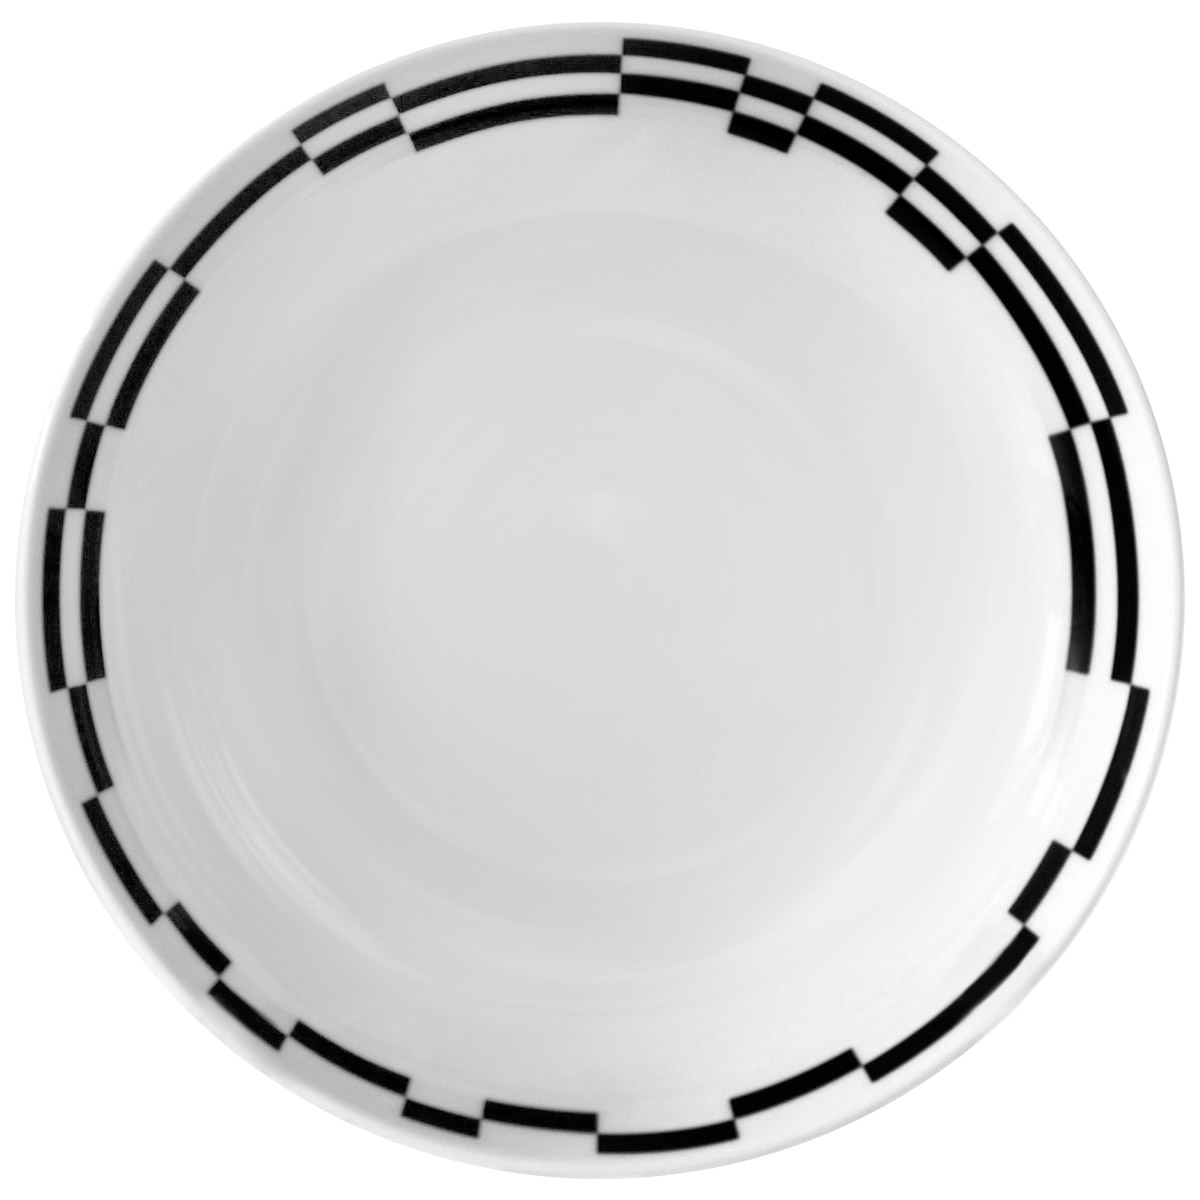 Тарелка глубокая Thun Tom Черно-белые полоски 20 см тарелка десертная thun tom полоски 19 см